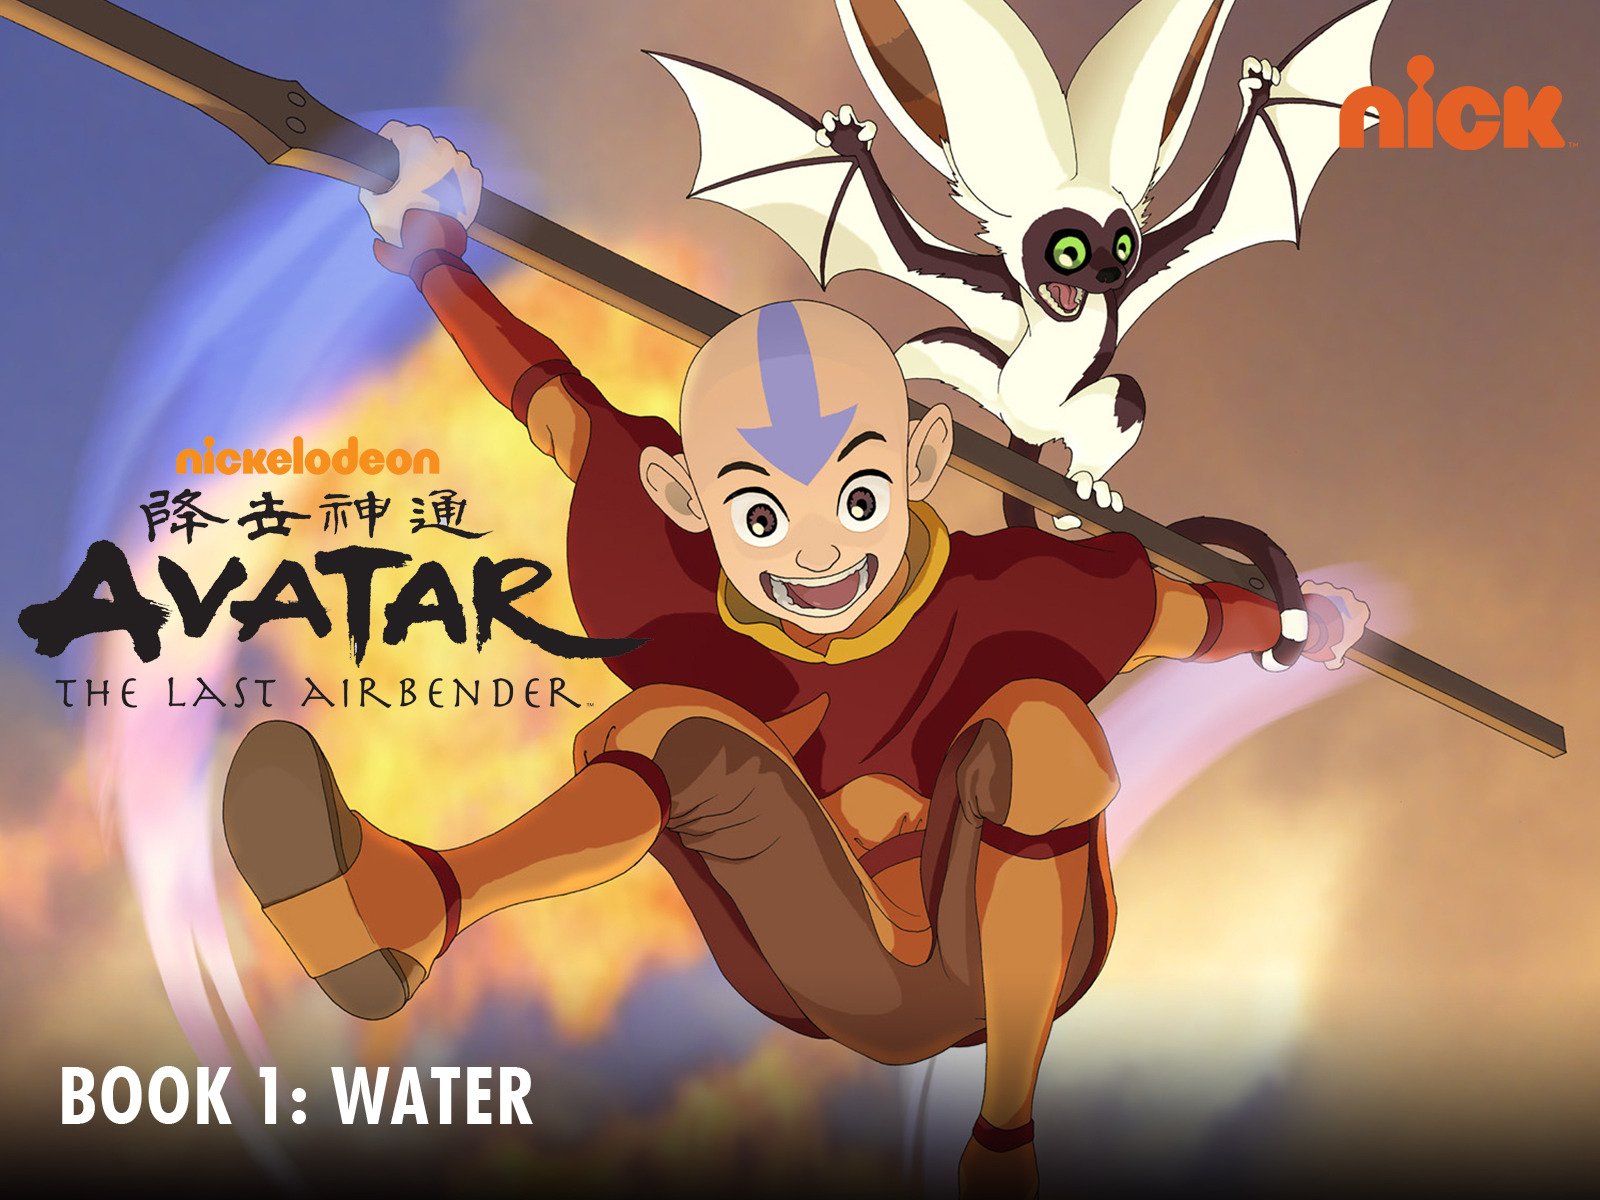 Avatar: The Last Airbender Season 1 Episodes in Tamil Telugu Hindi English 1080p BluRay Esub